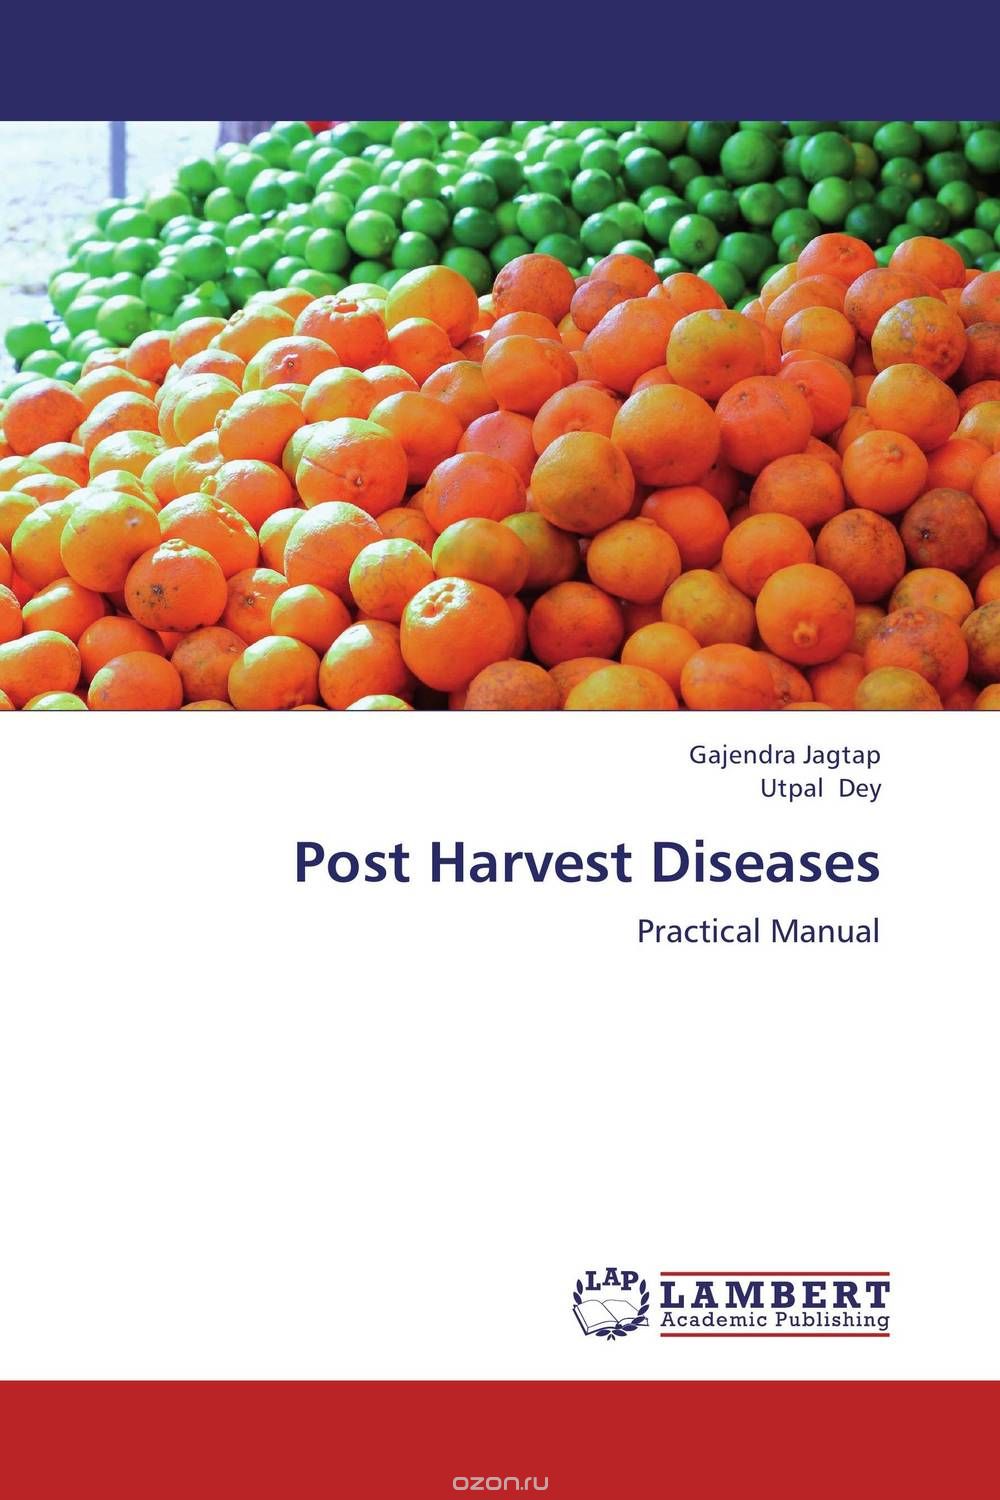 Скачать книгу "Post Harvest Diseases"